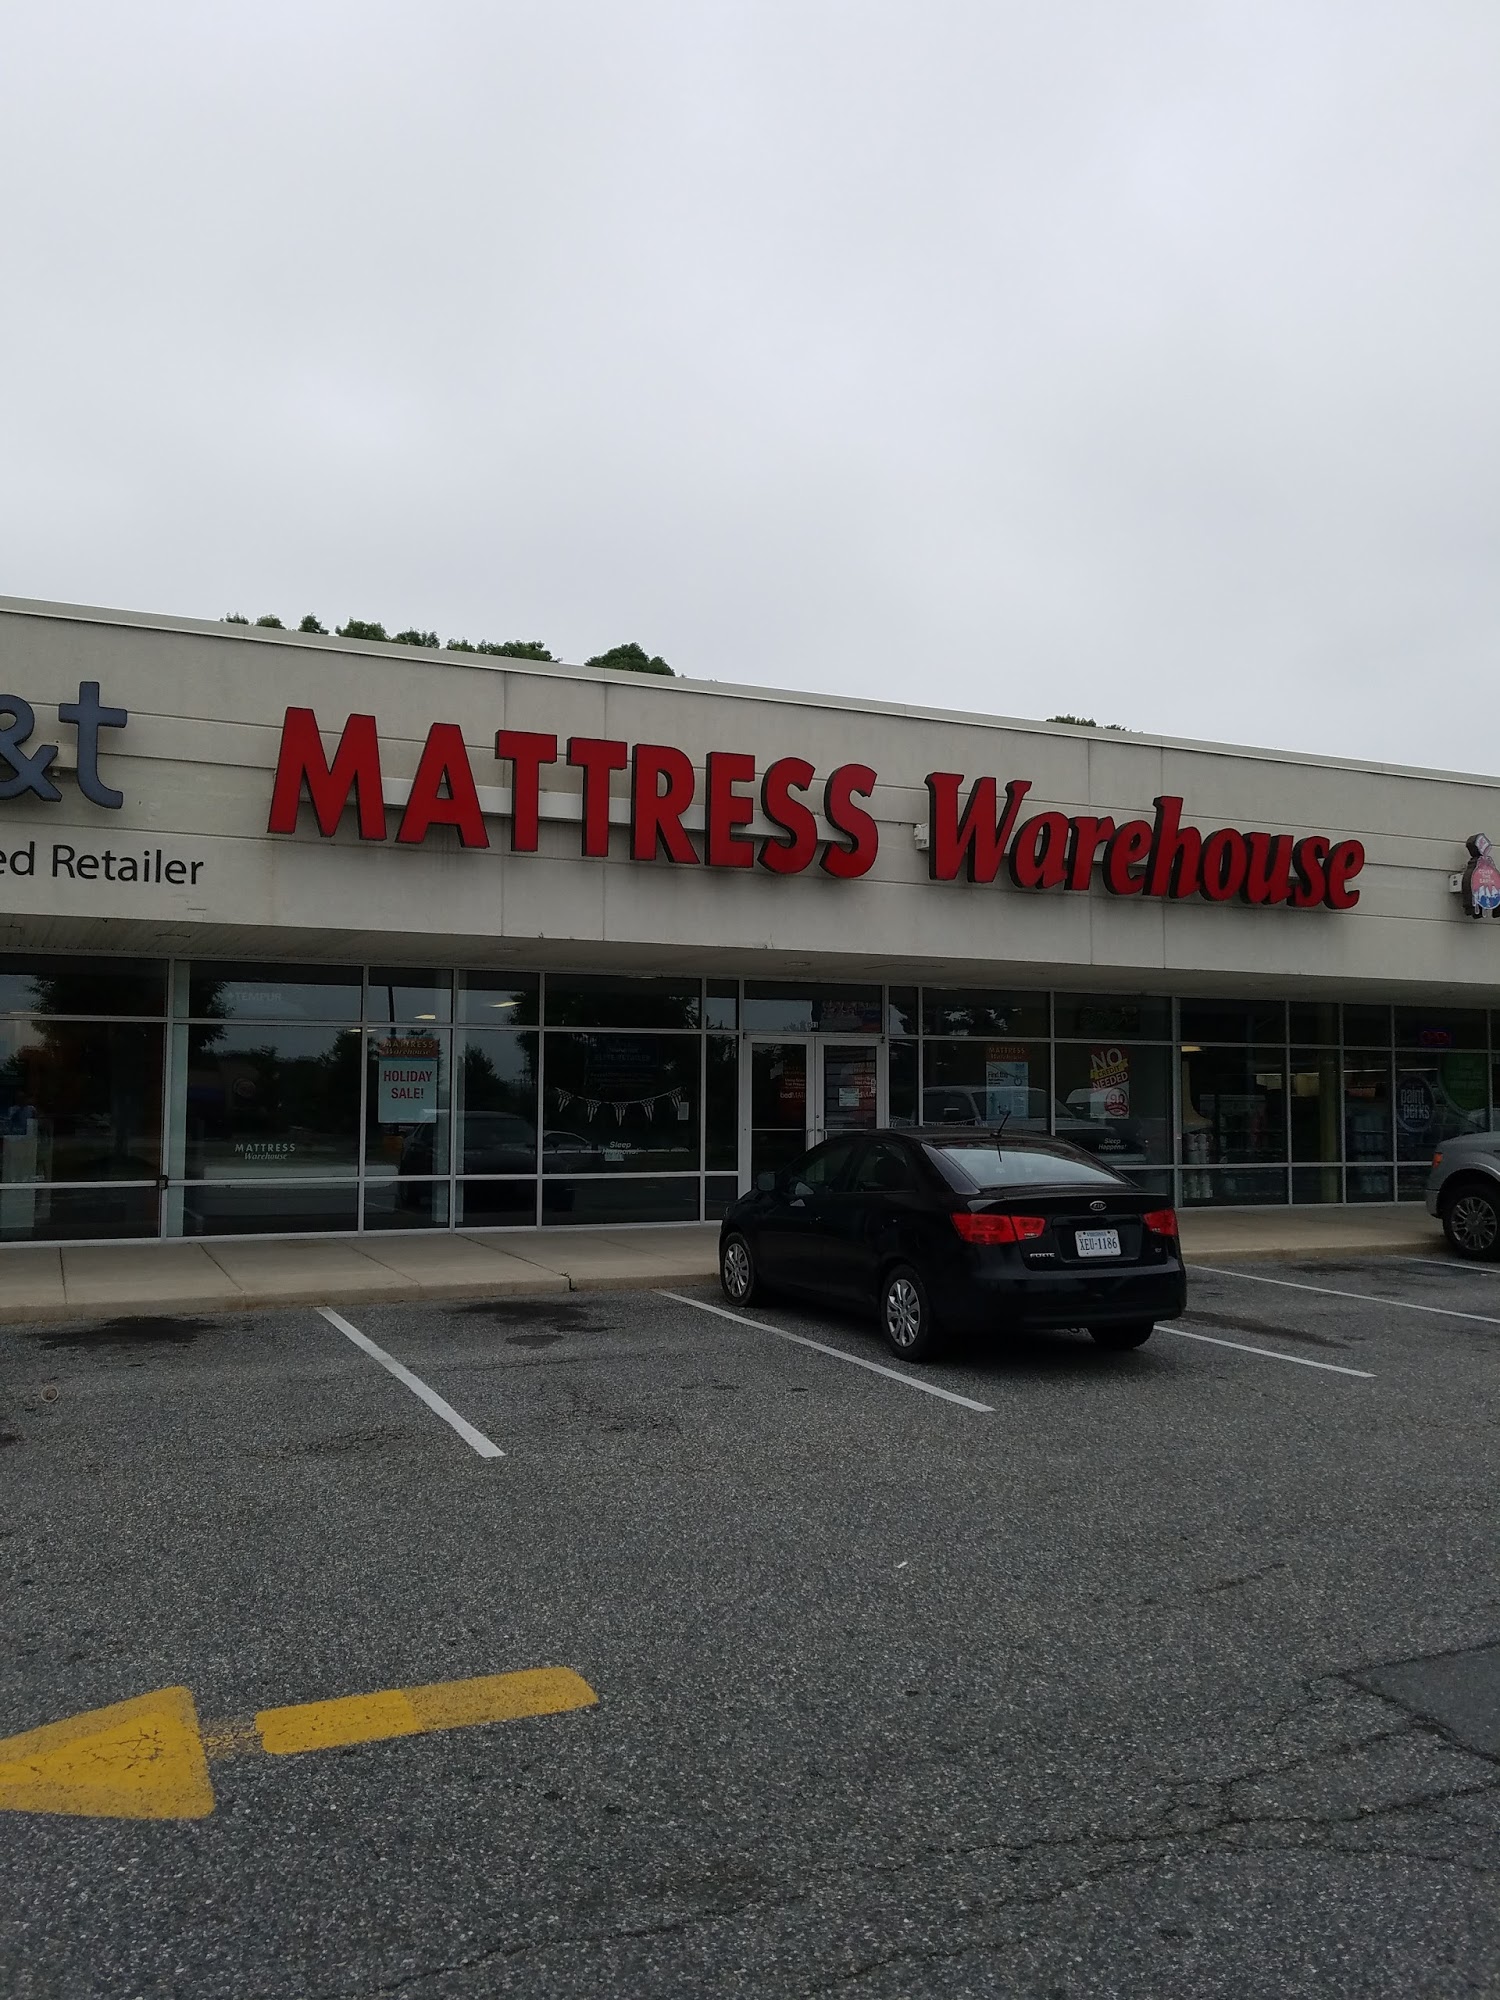 Mattress Warehouse of North East